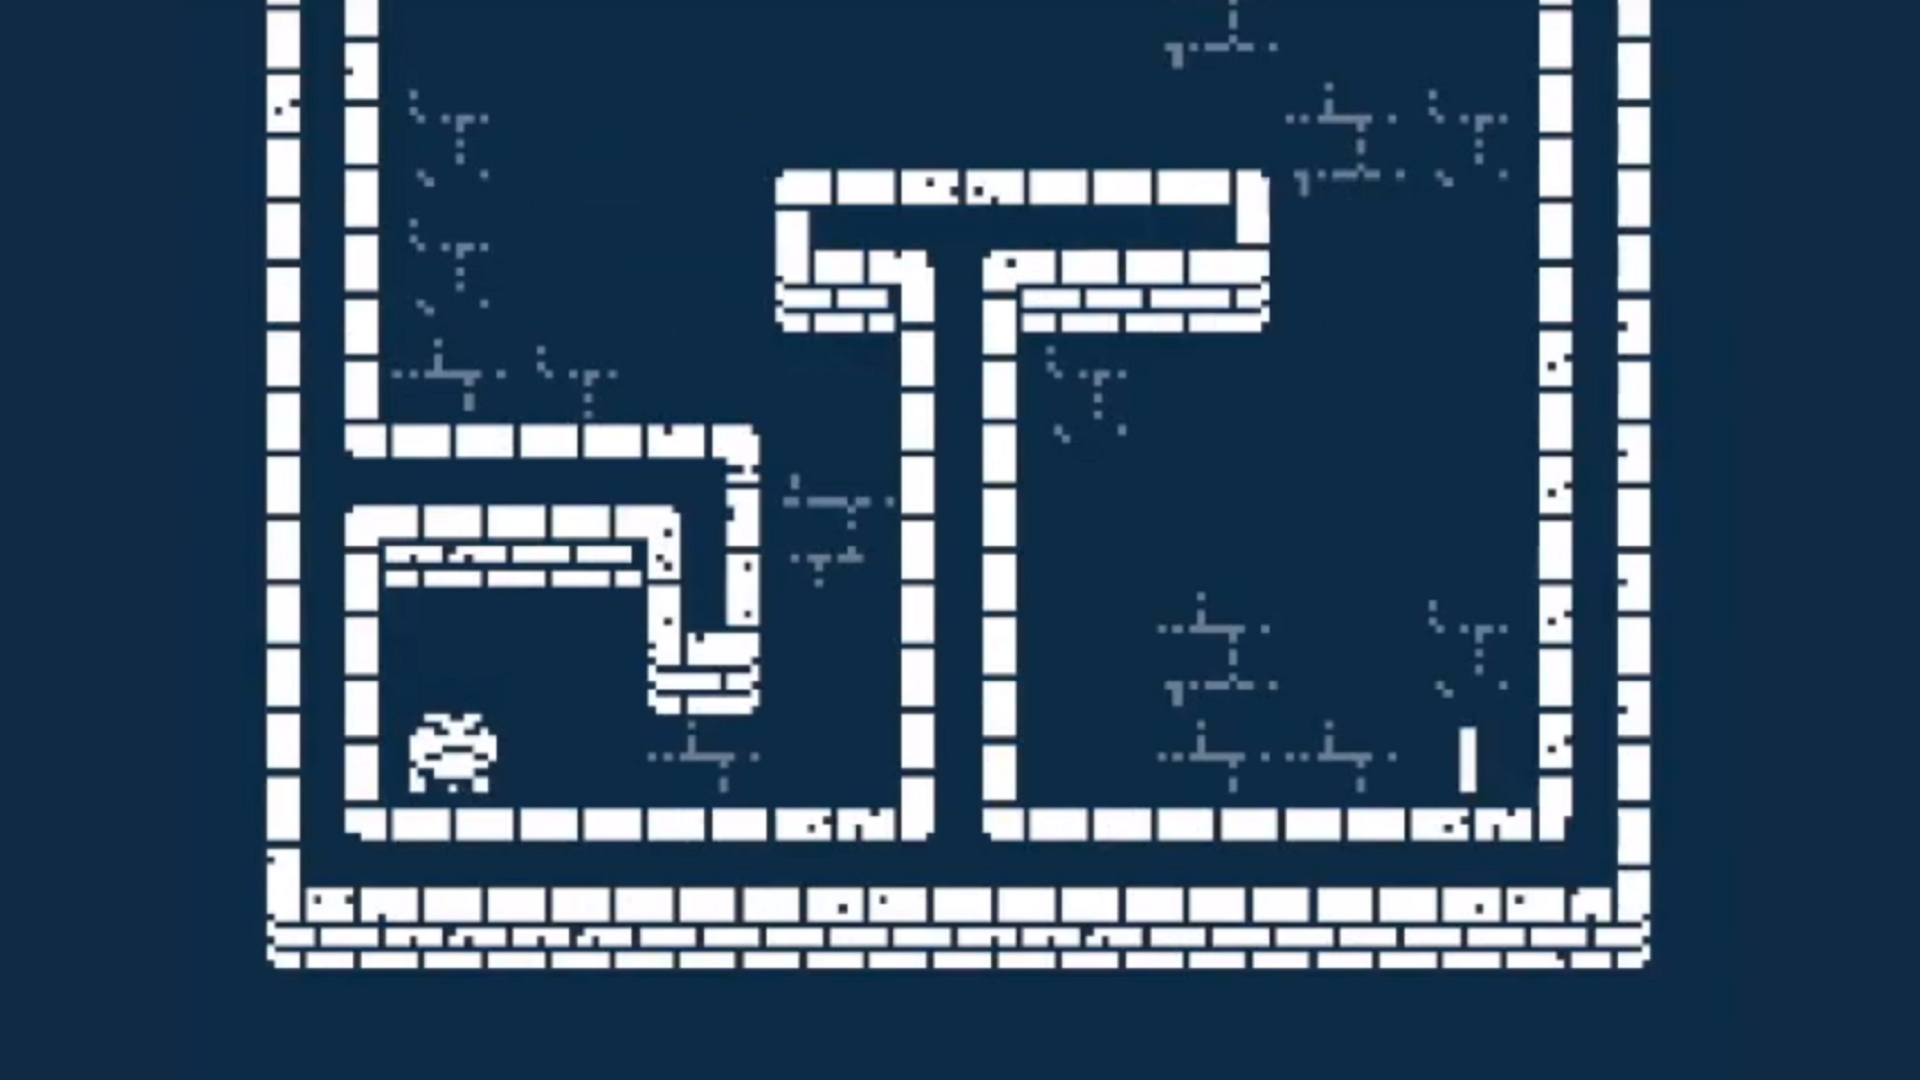 Pixel-art dungeon level